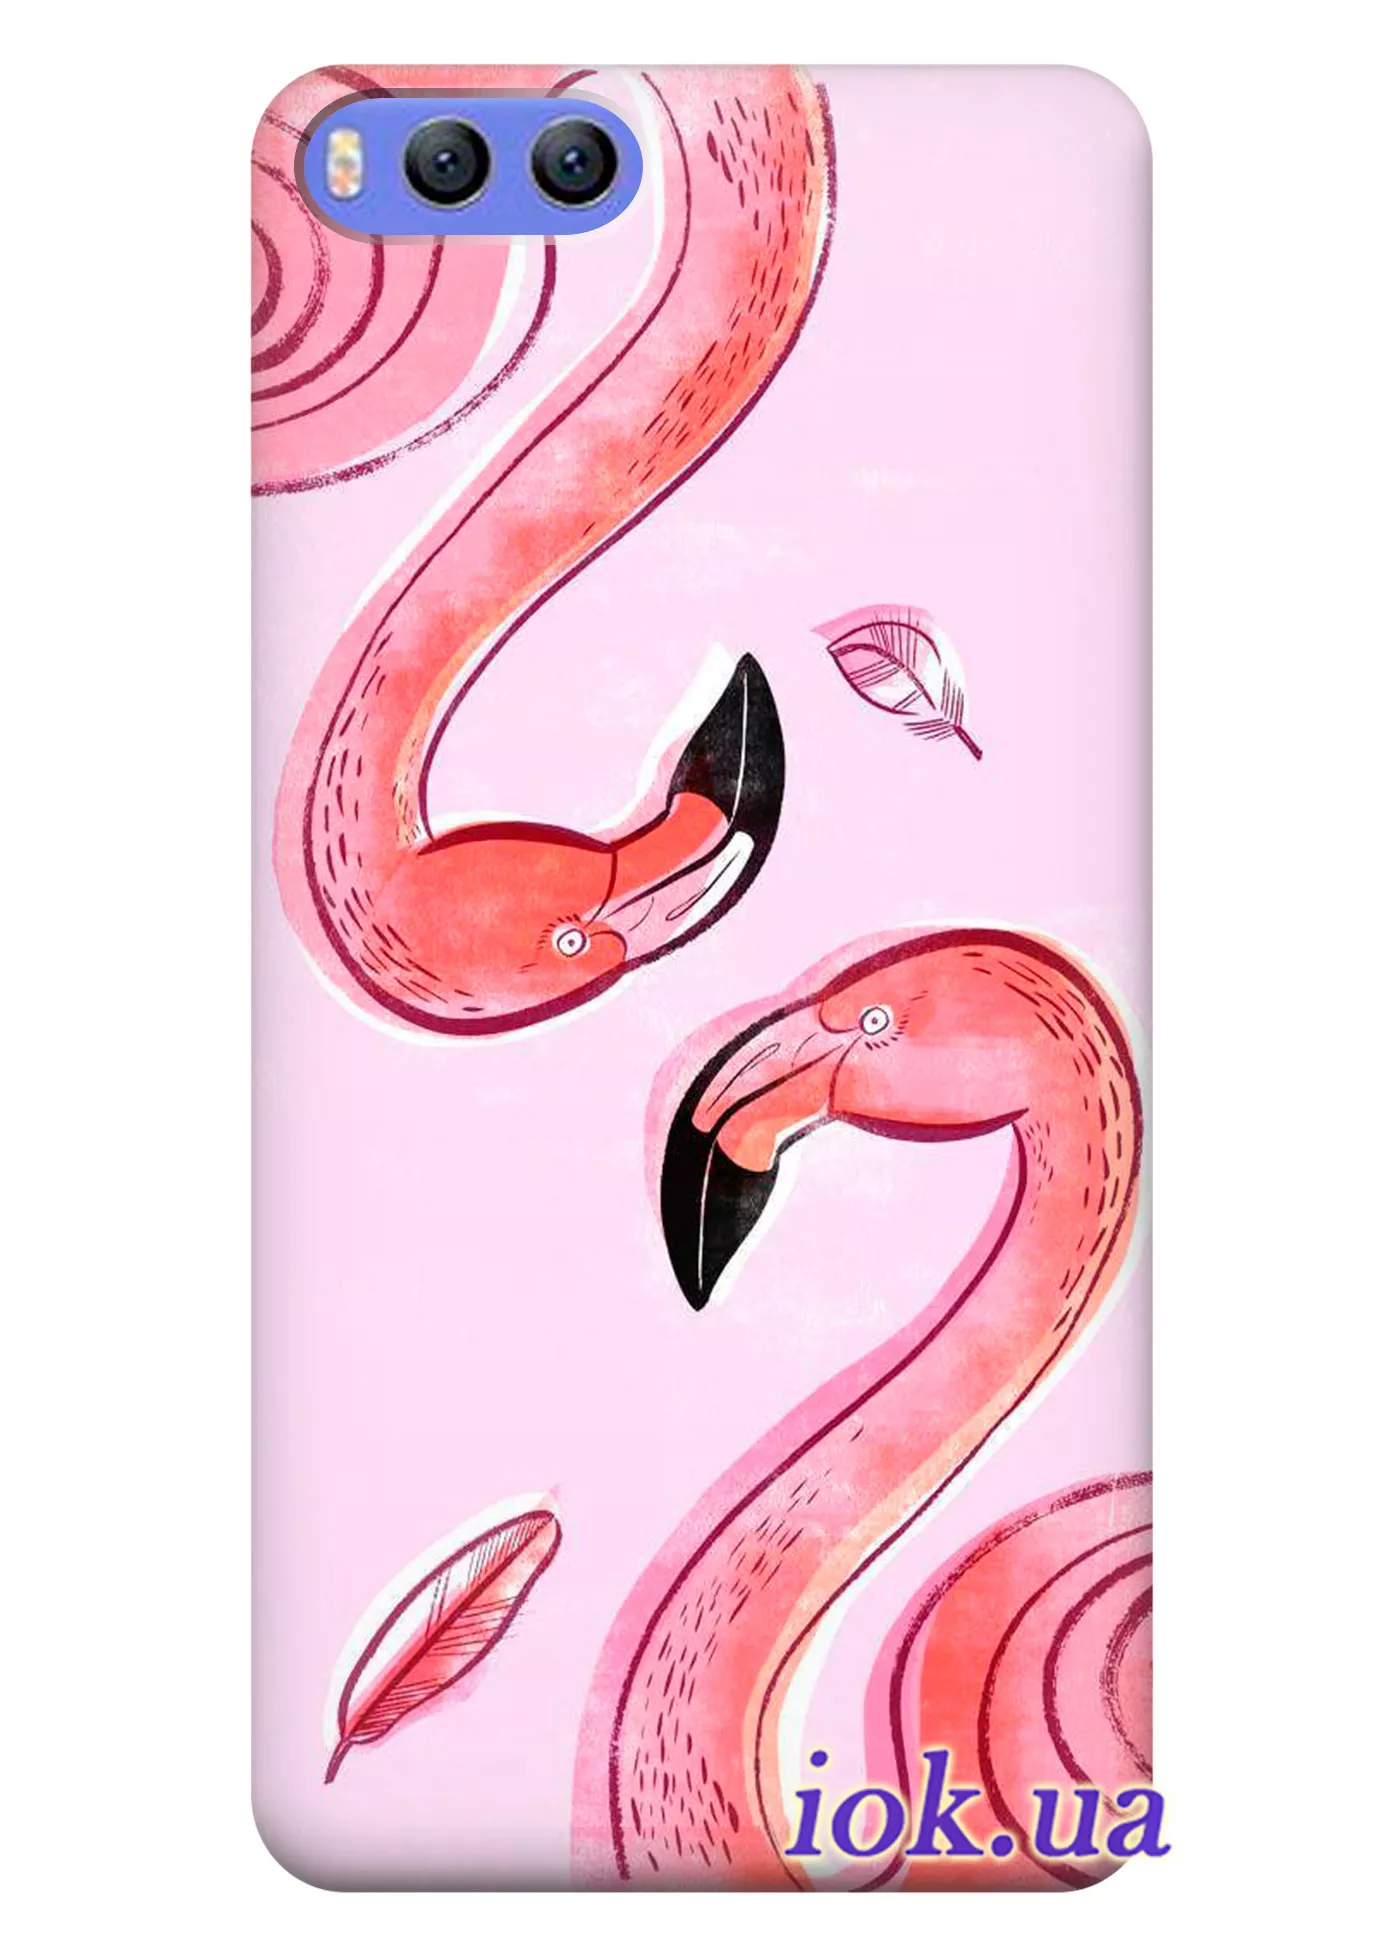 Чехол для Xiaomi Mi6 - Flamingo